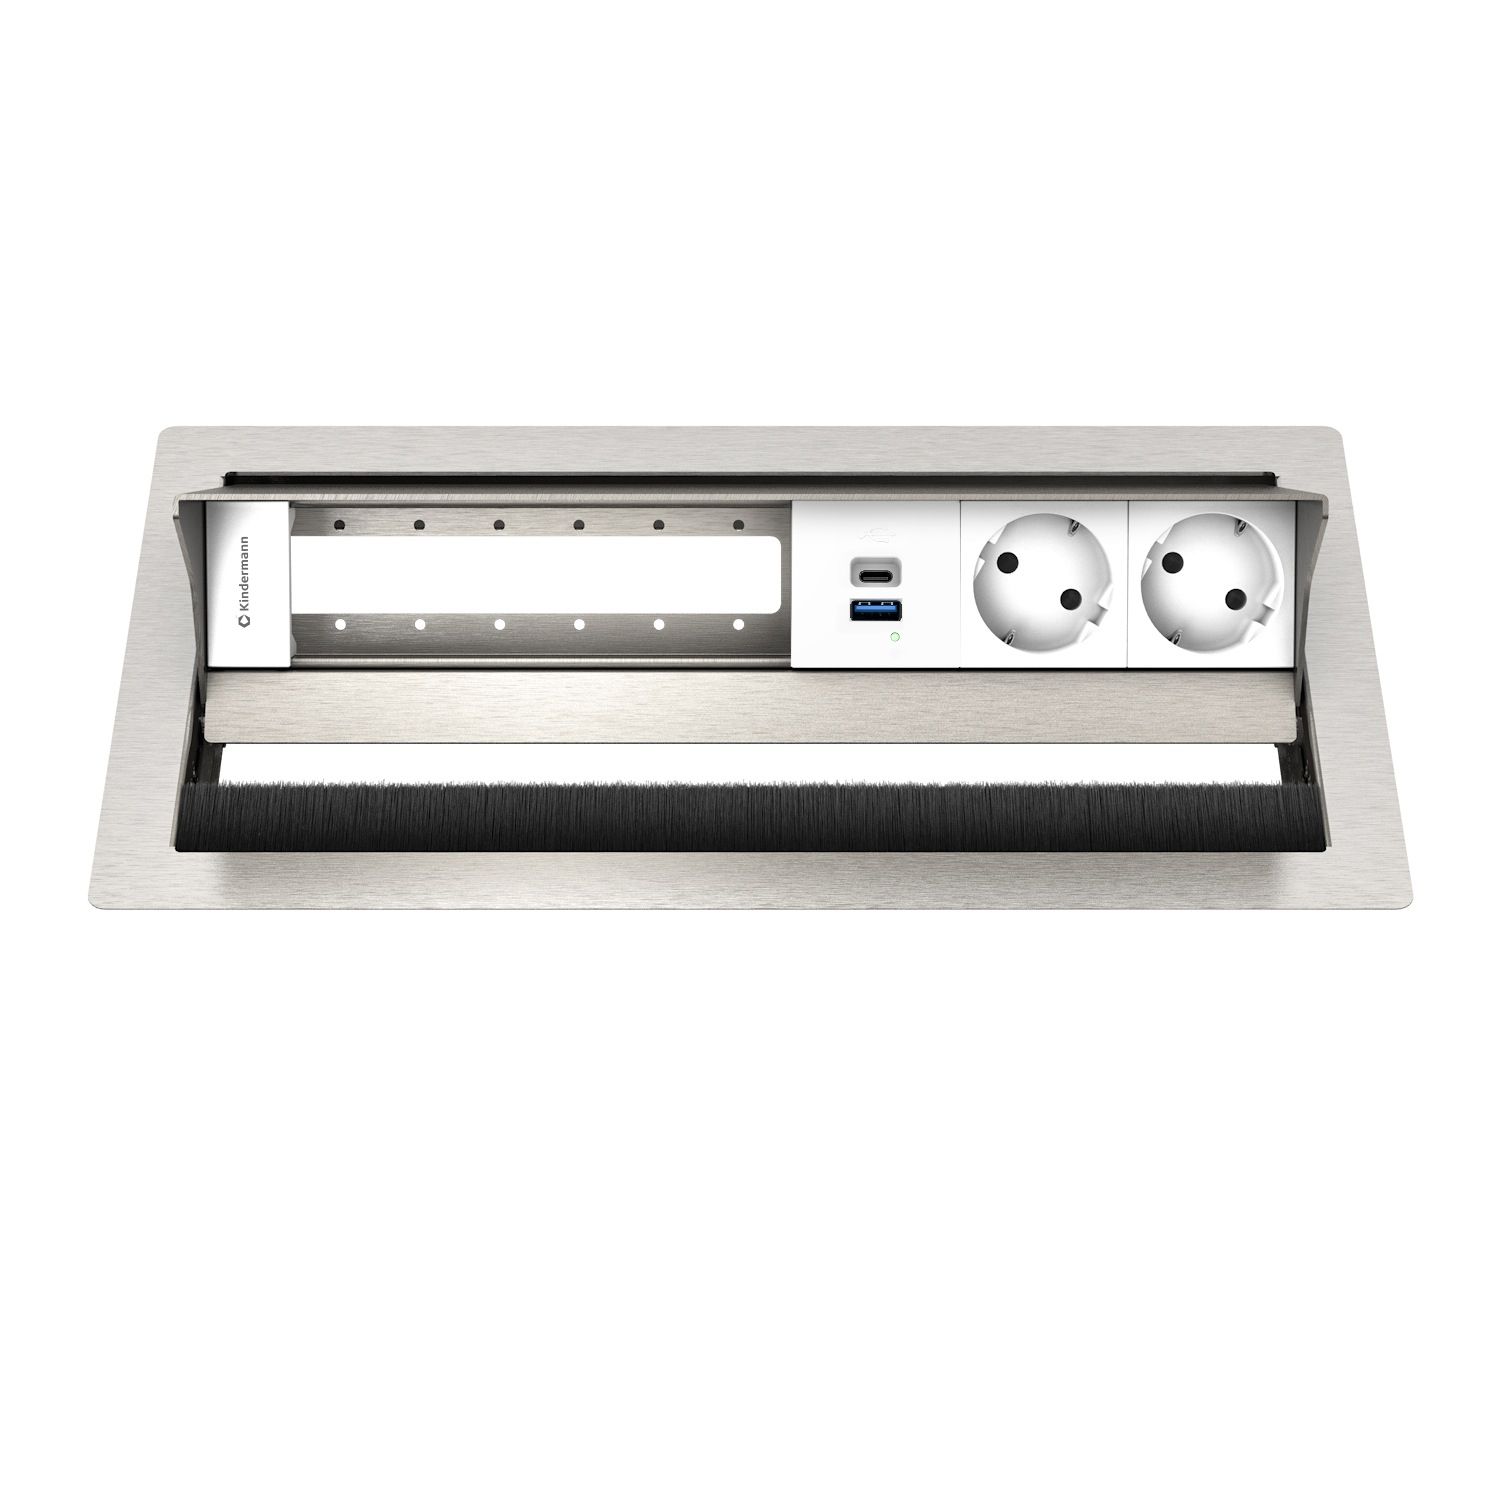 Kindermann CablePort Standard² VA 6-way 2x power - 1x USB-A / 1x USB-C - desktop housing - stainless steel